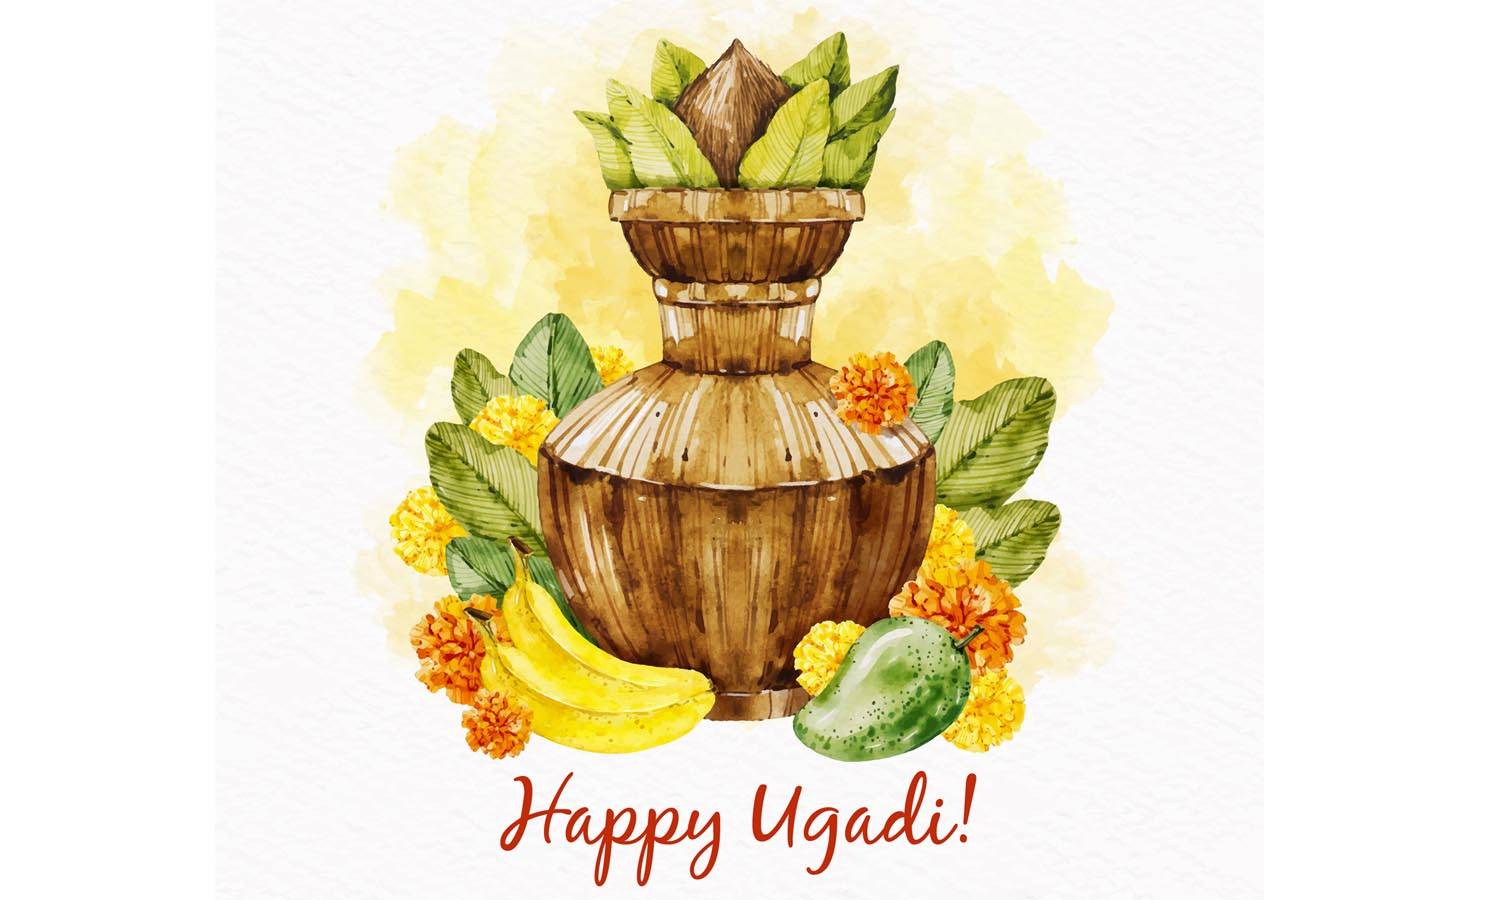 Ugadi festival Messages Image